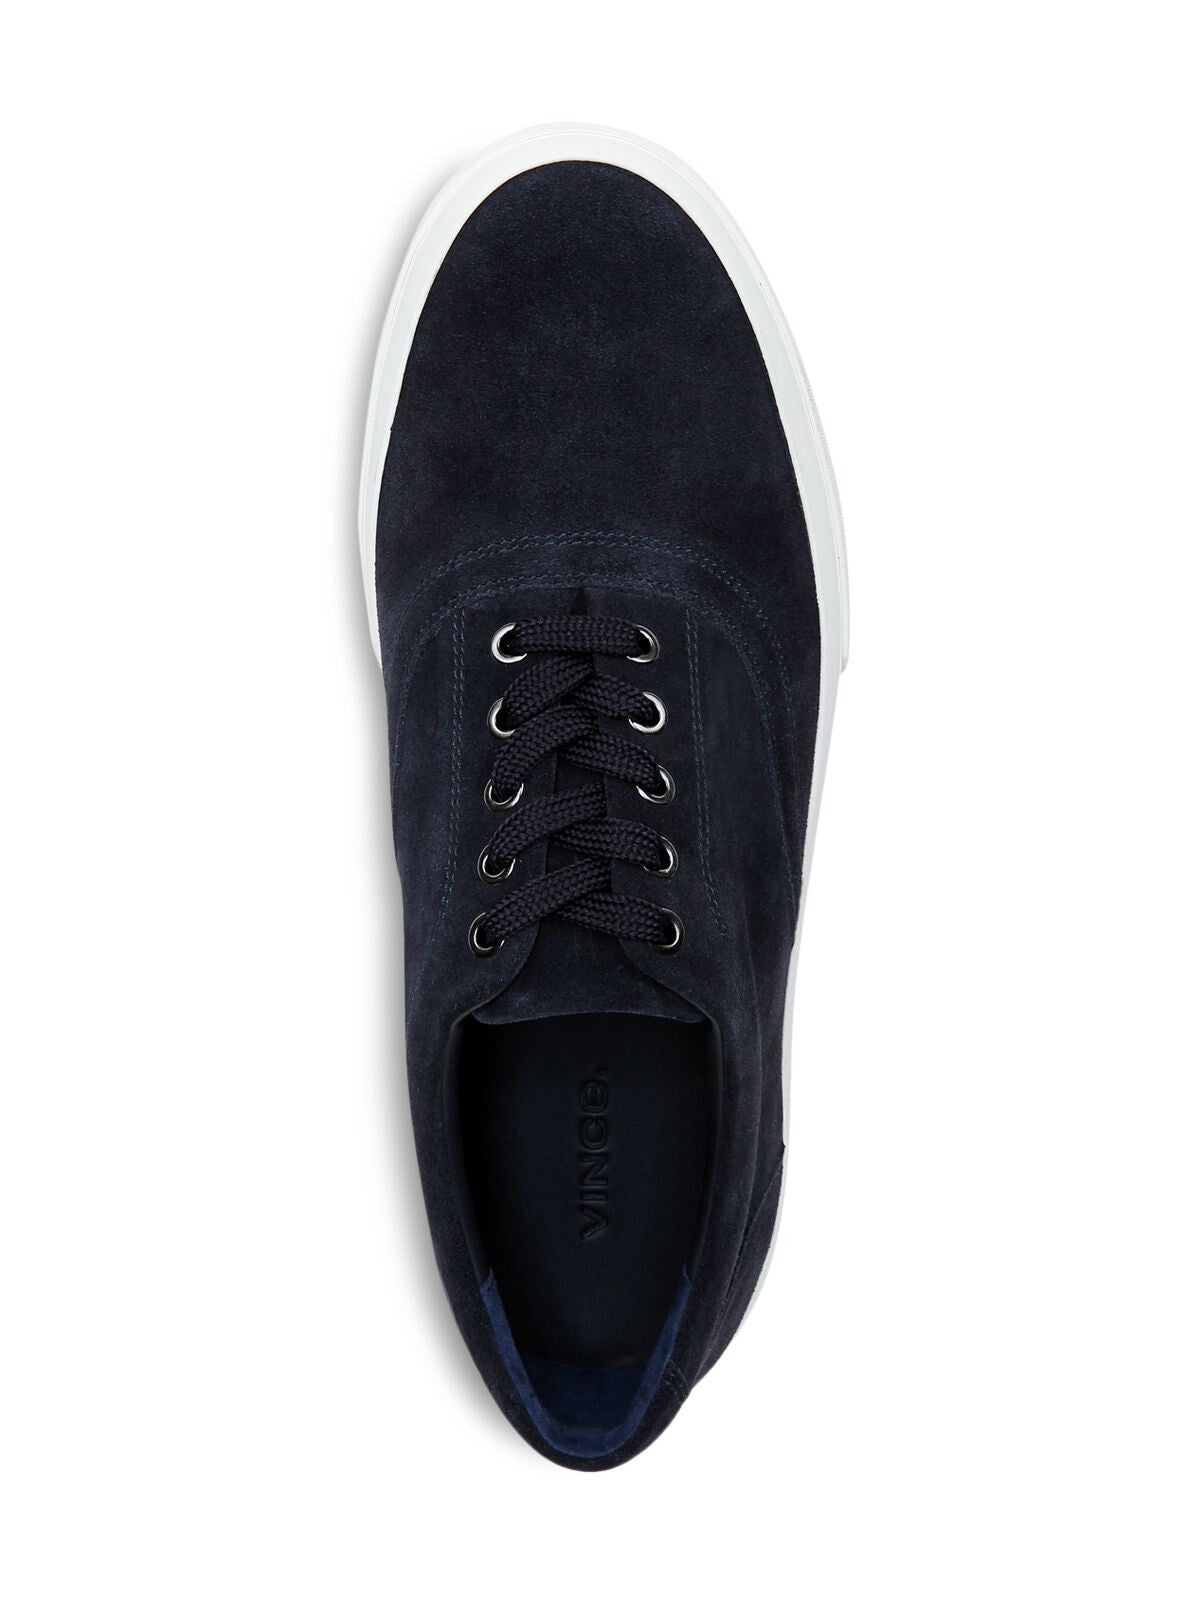 VINCE. Mens Navy Comfort Fullington Round Toe Platform Lace-Up Leather Sneakers Shoes 10.5 M